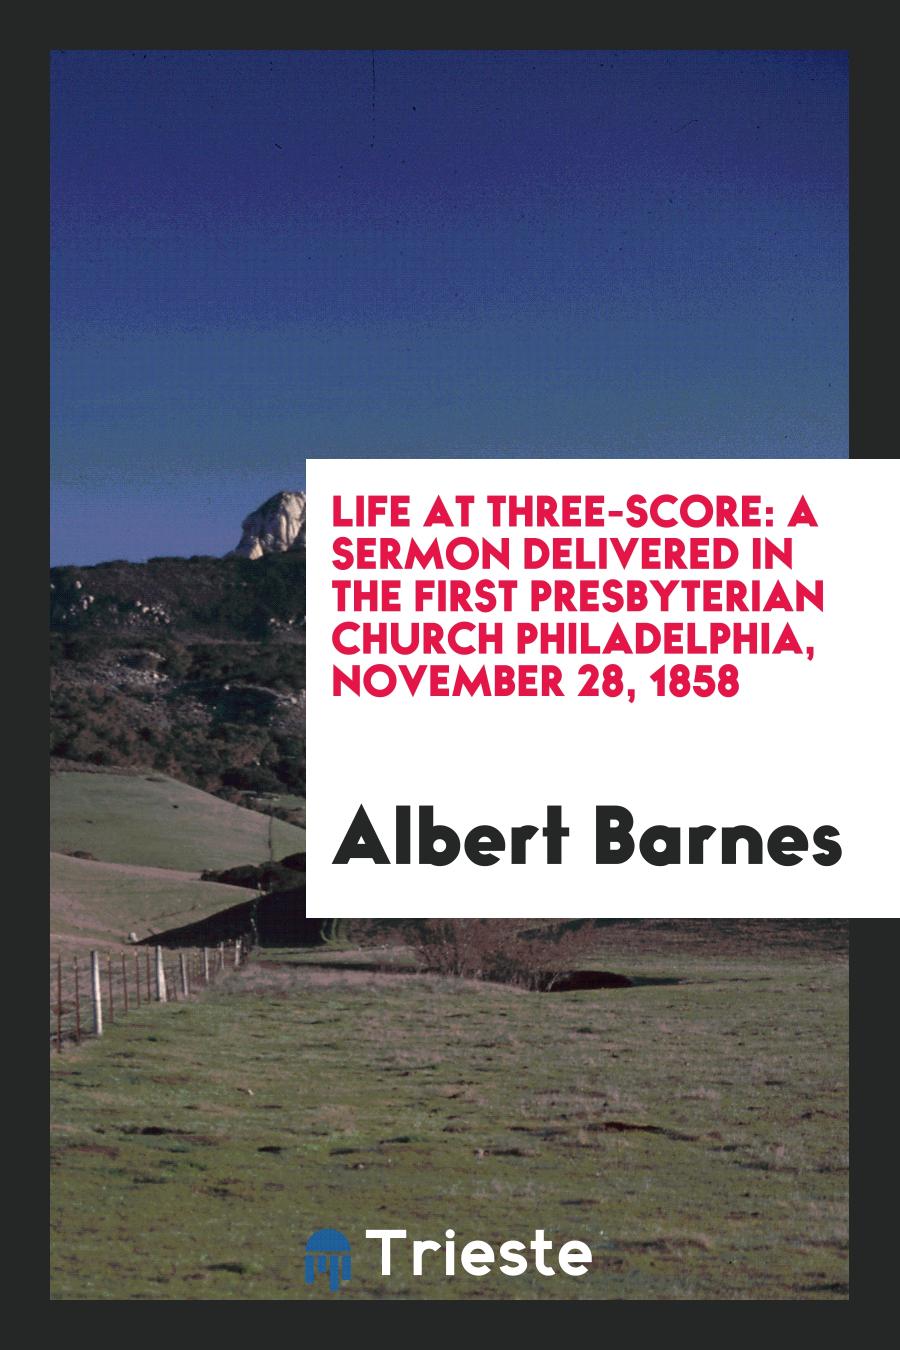 Life at Three-score: A Sermon Delivered in the First Presbyterian Church Philadelphia, November 28, 1858